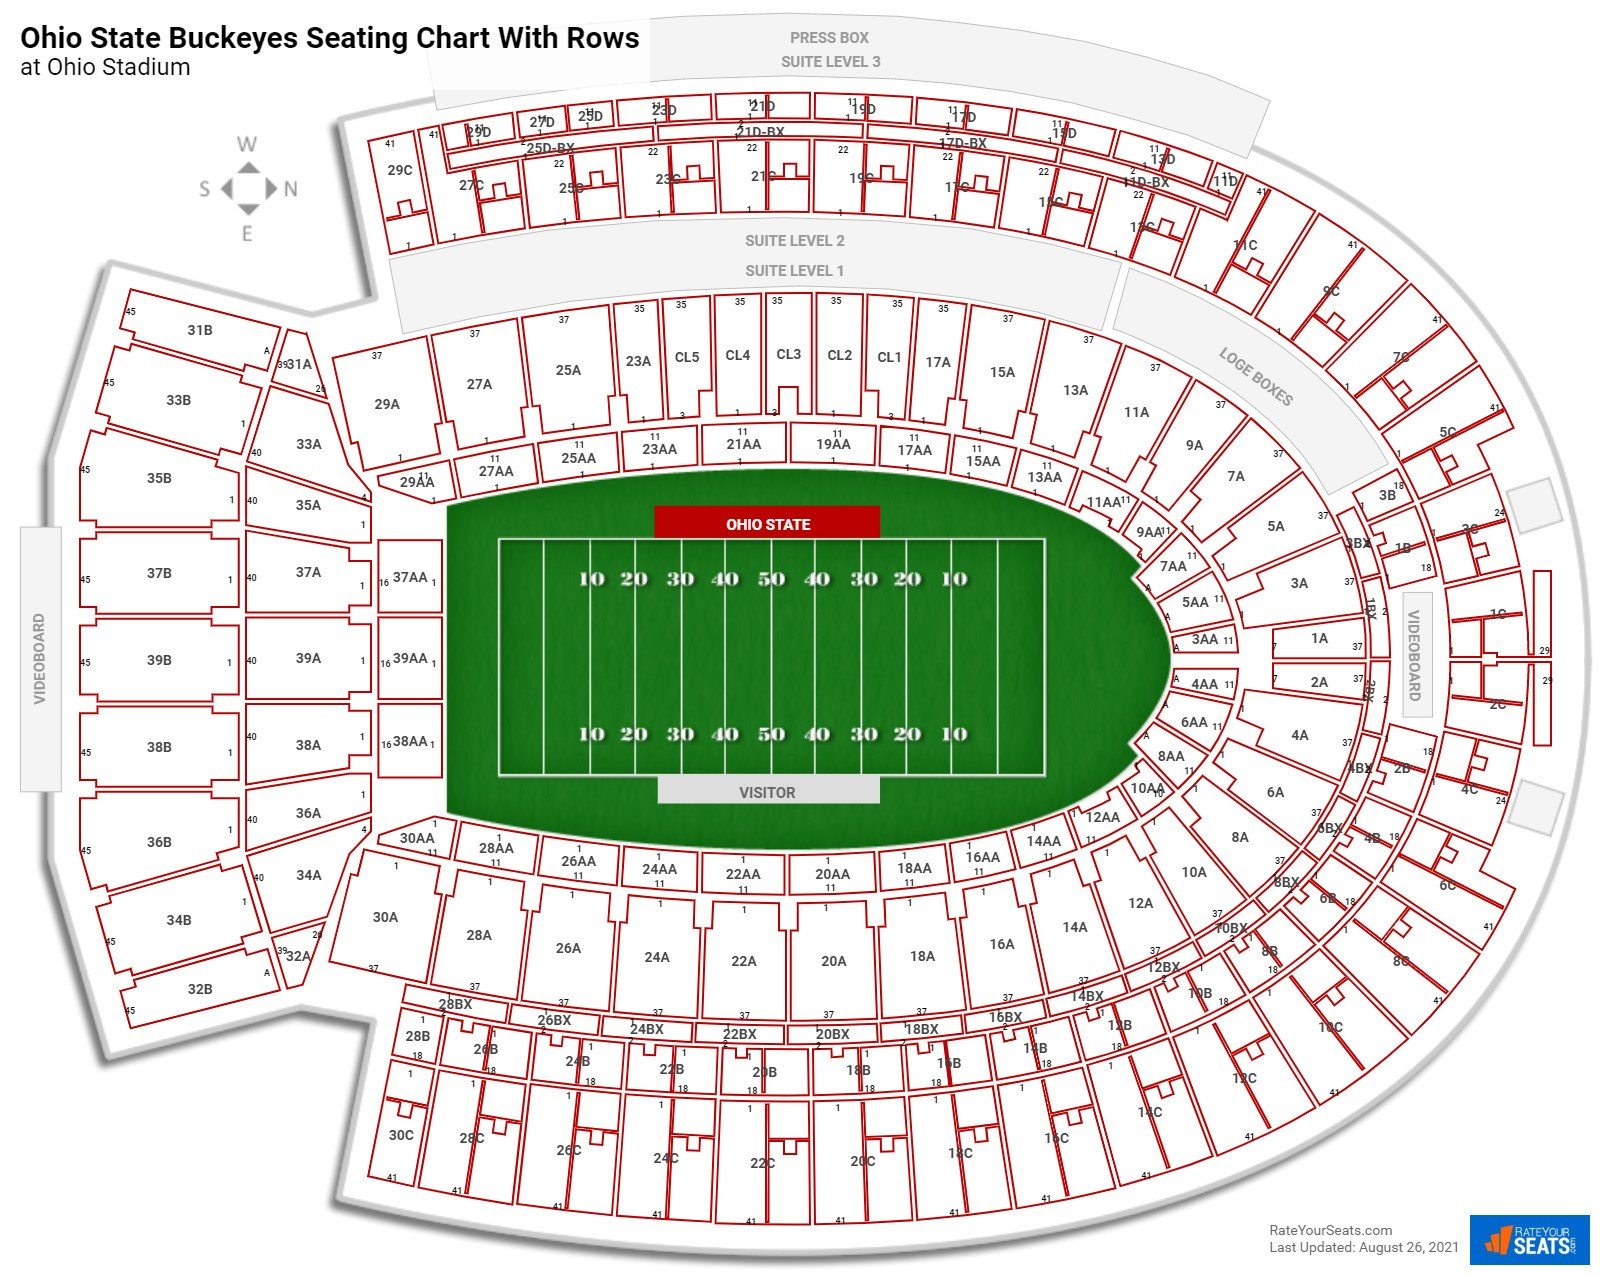 Ohio Stadium seating chart with row numbers